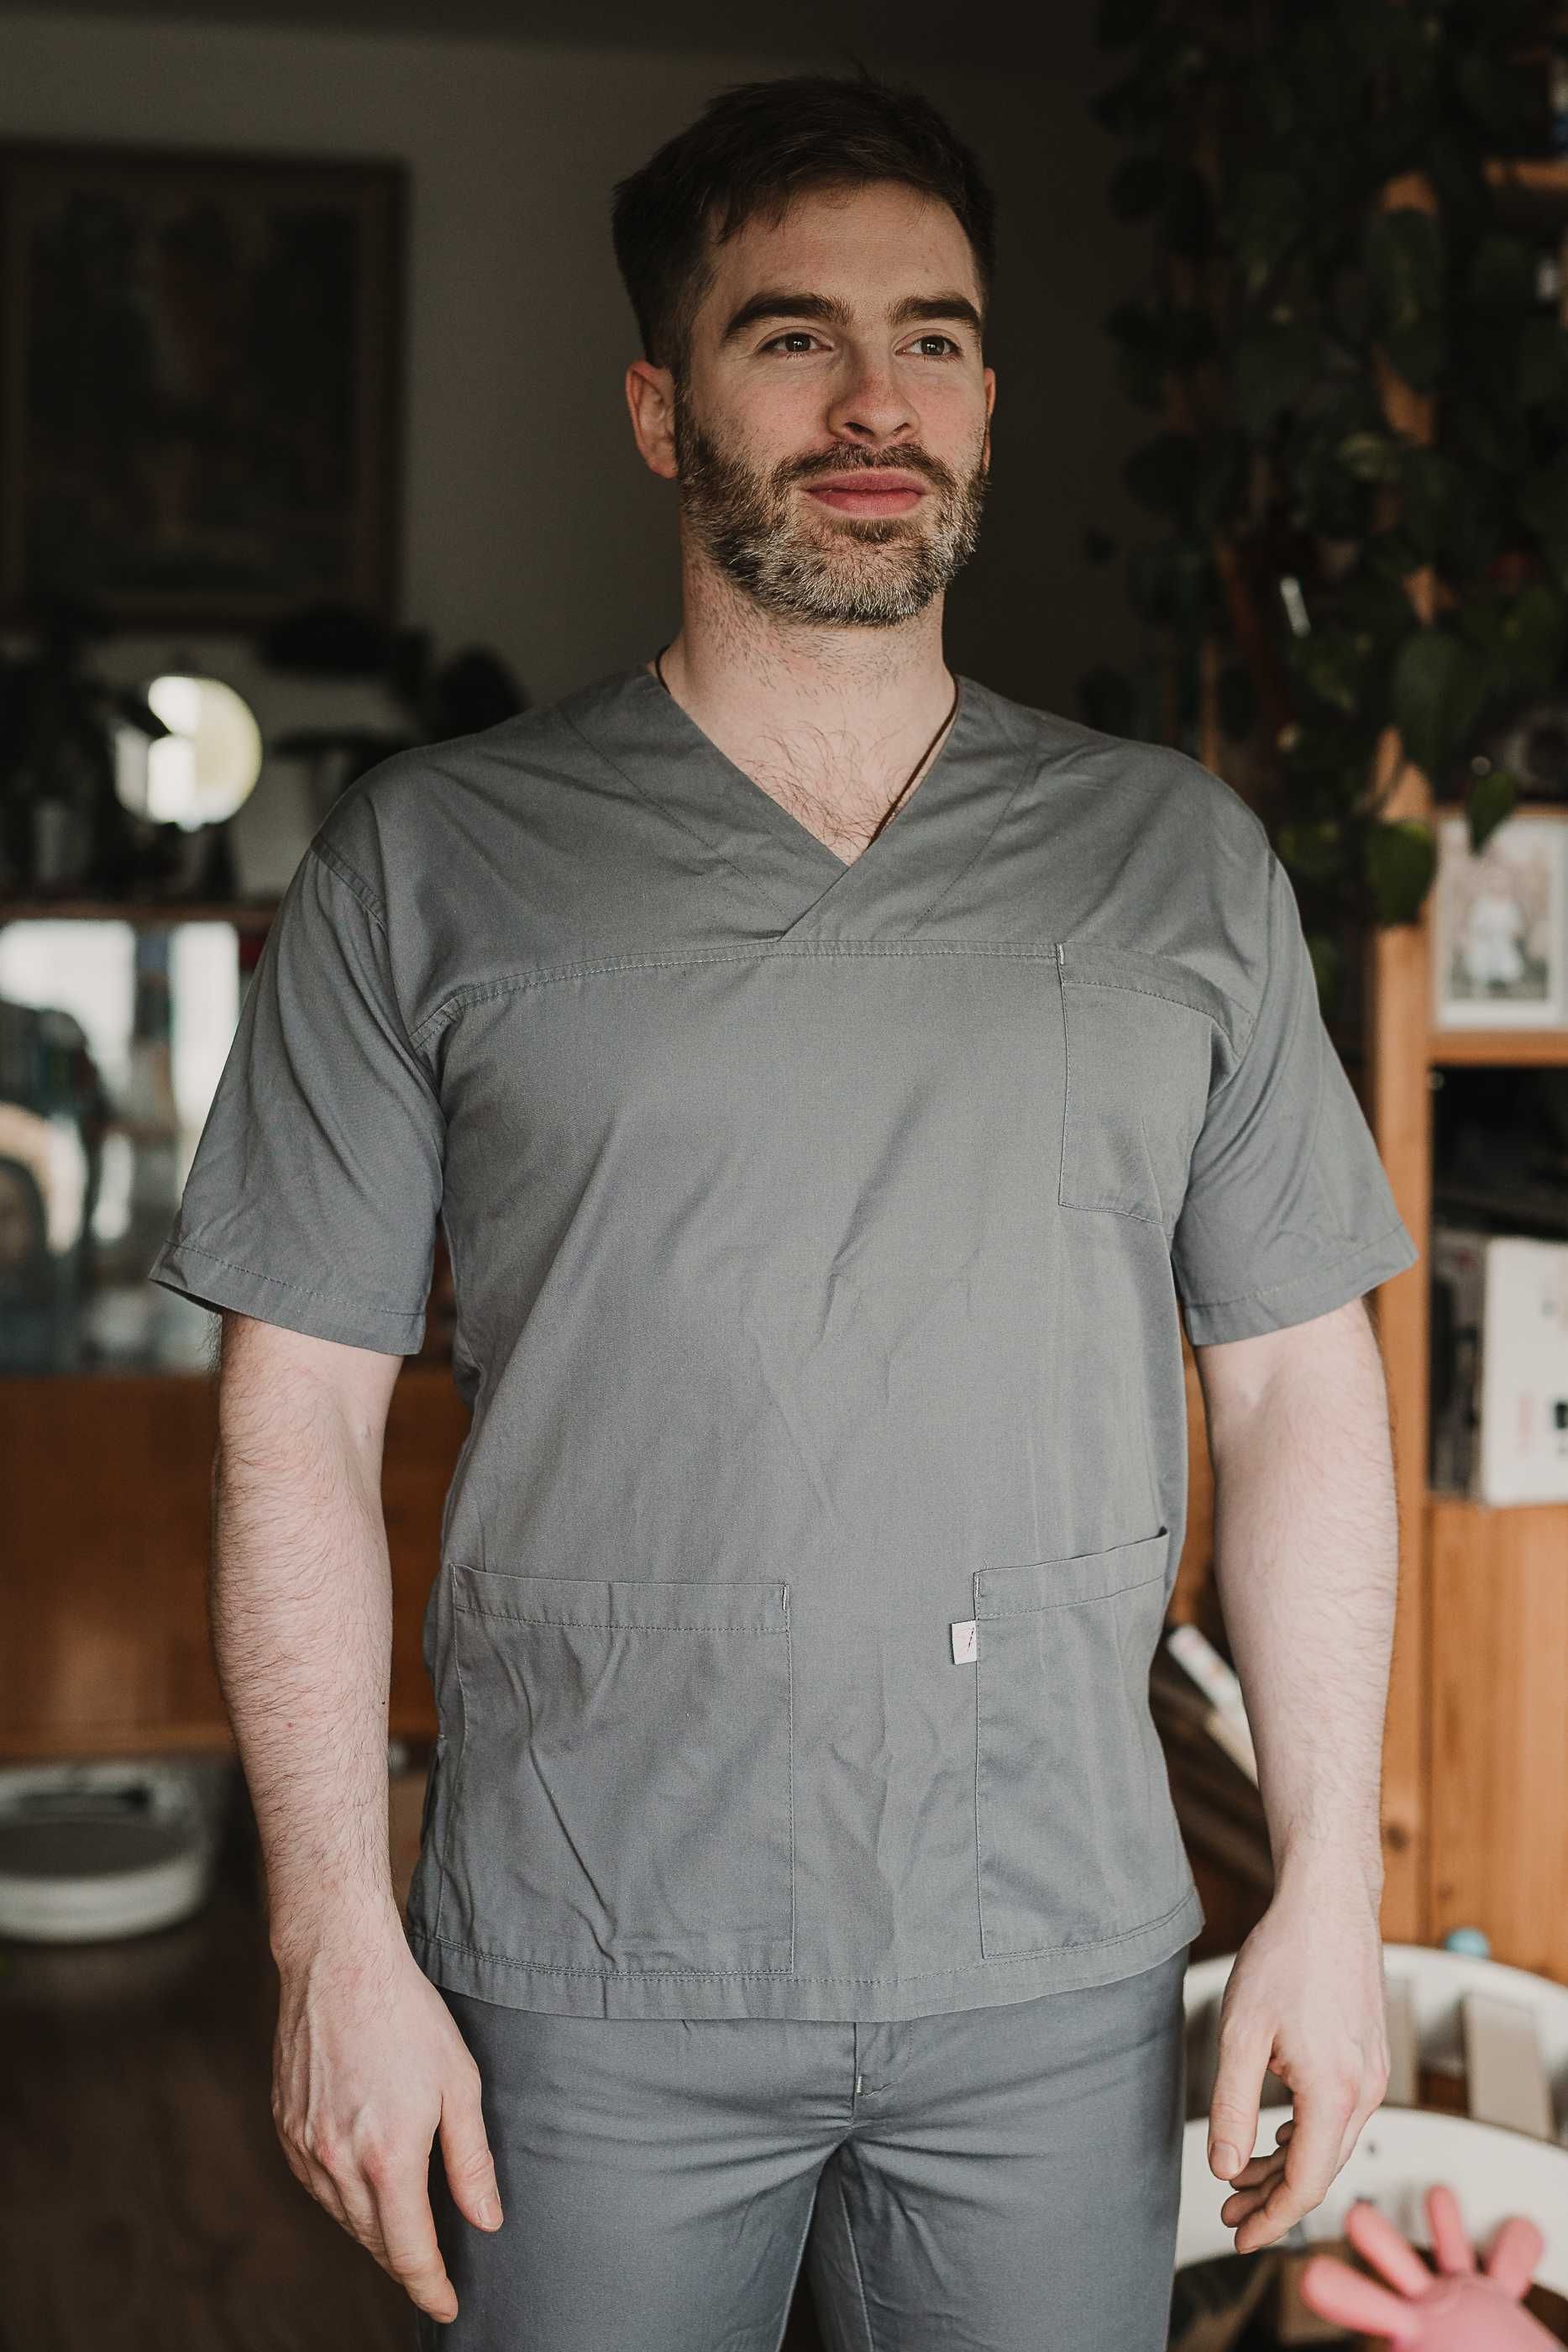 Scrubs mundurek medyczny zestaw bluza i spodnie szary